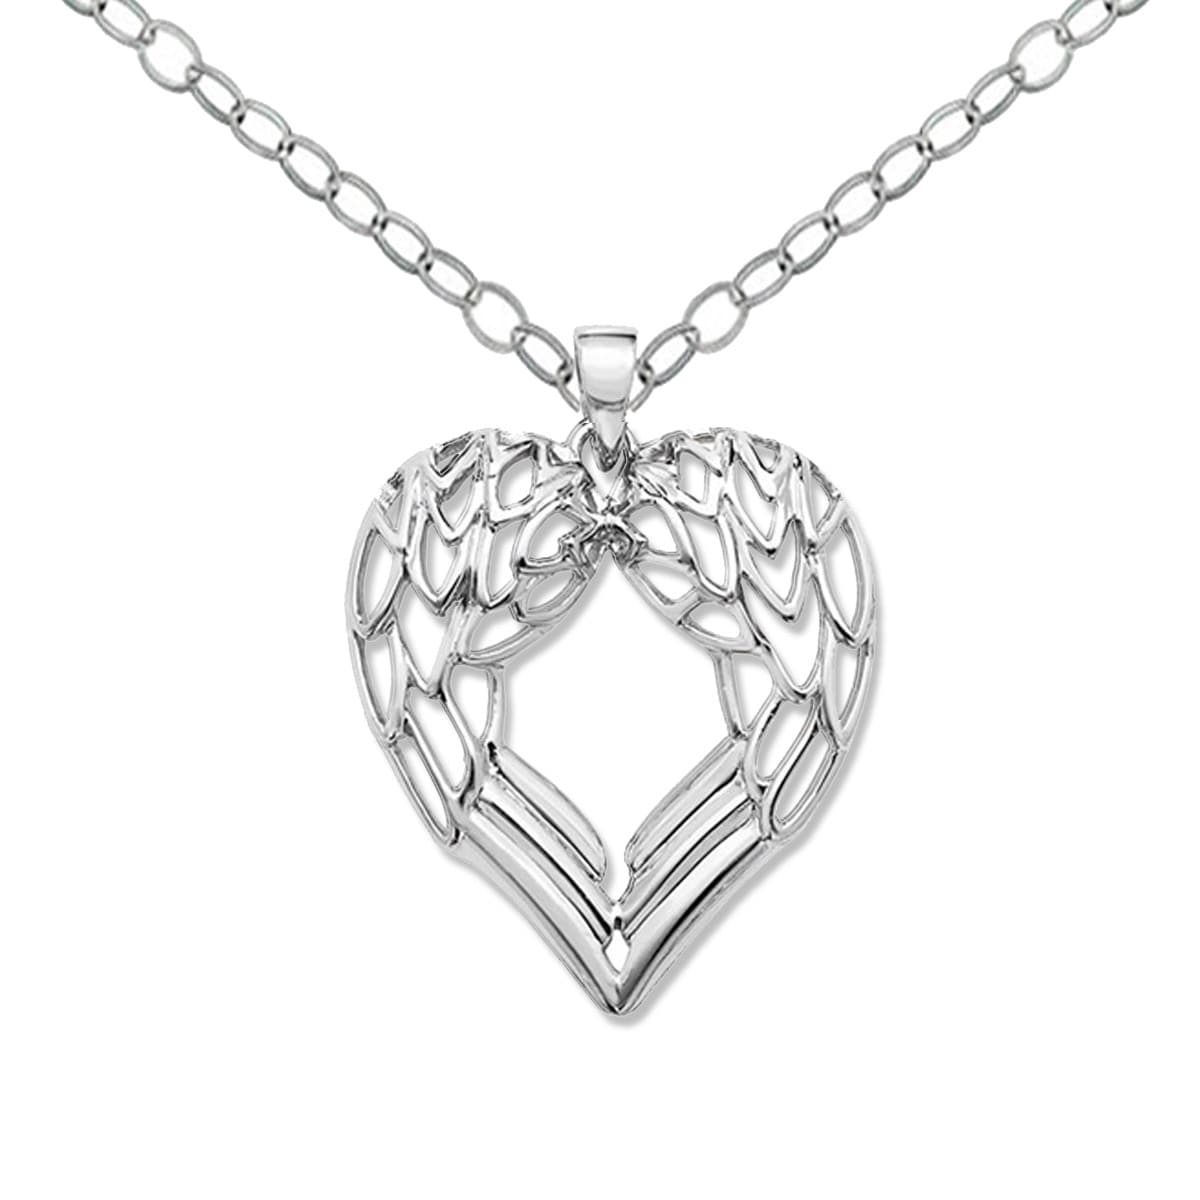 Silver angel wings heart necklace